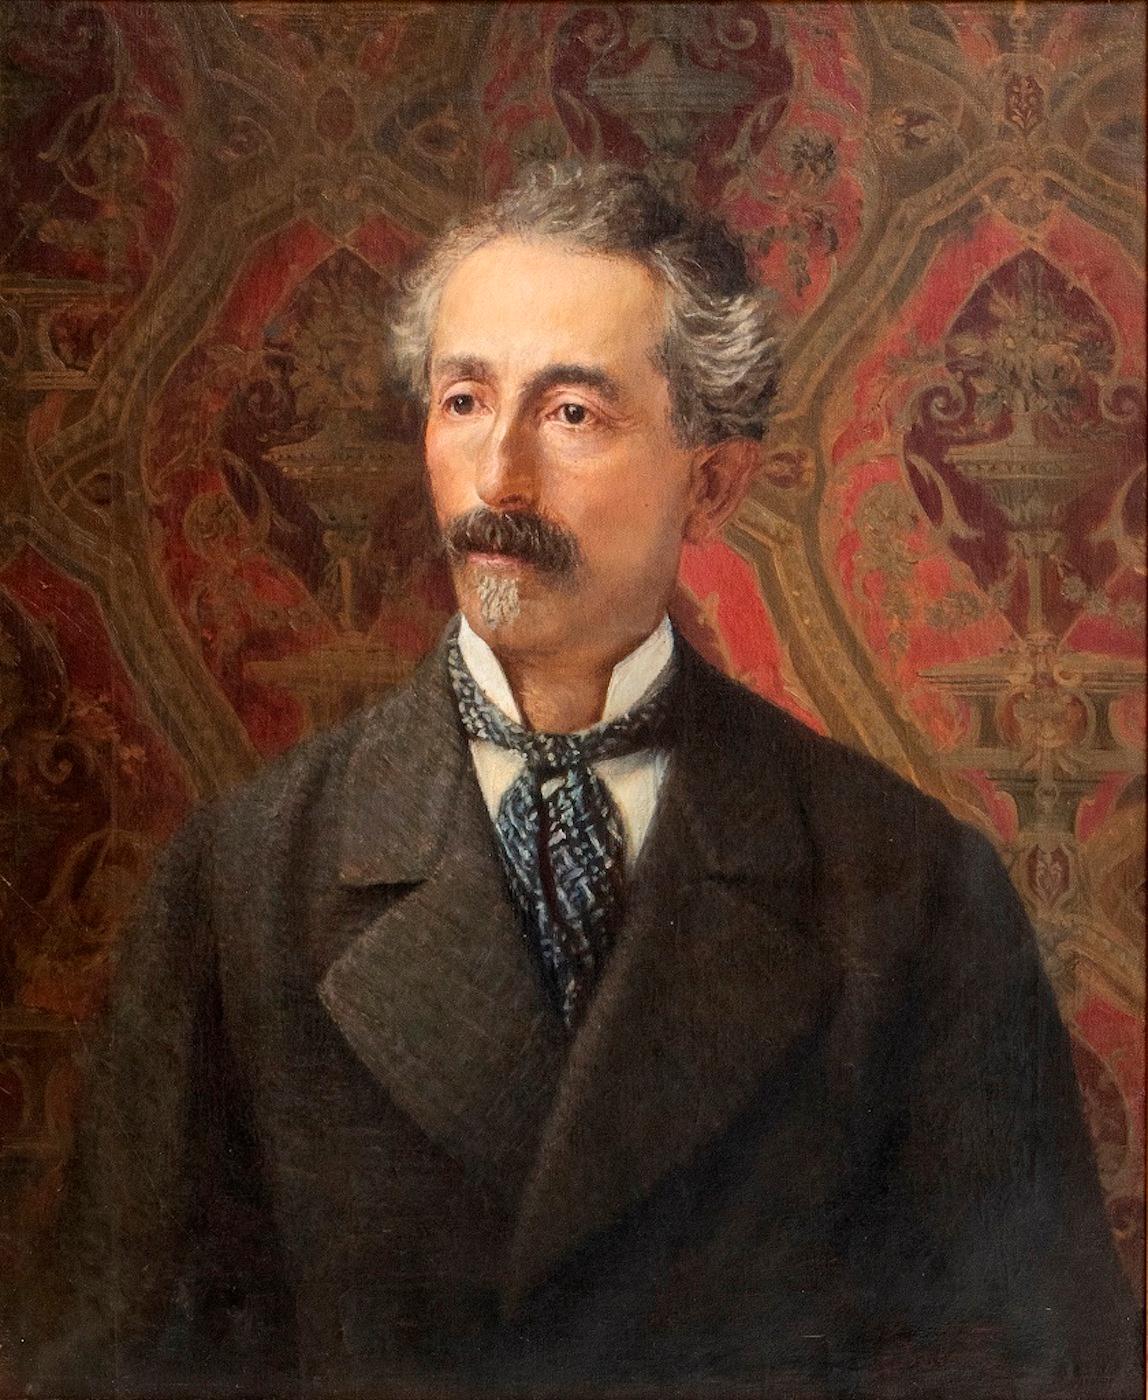 Gaetano Bocchetti Portrait Painting - Portrait of a Man - Oil on Canvas by G. Bocchetti - Mid 20th Century